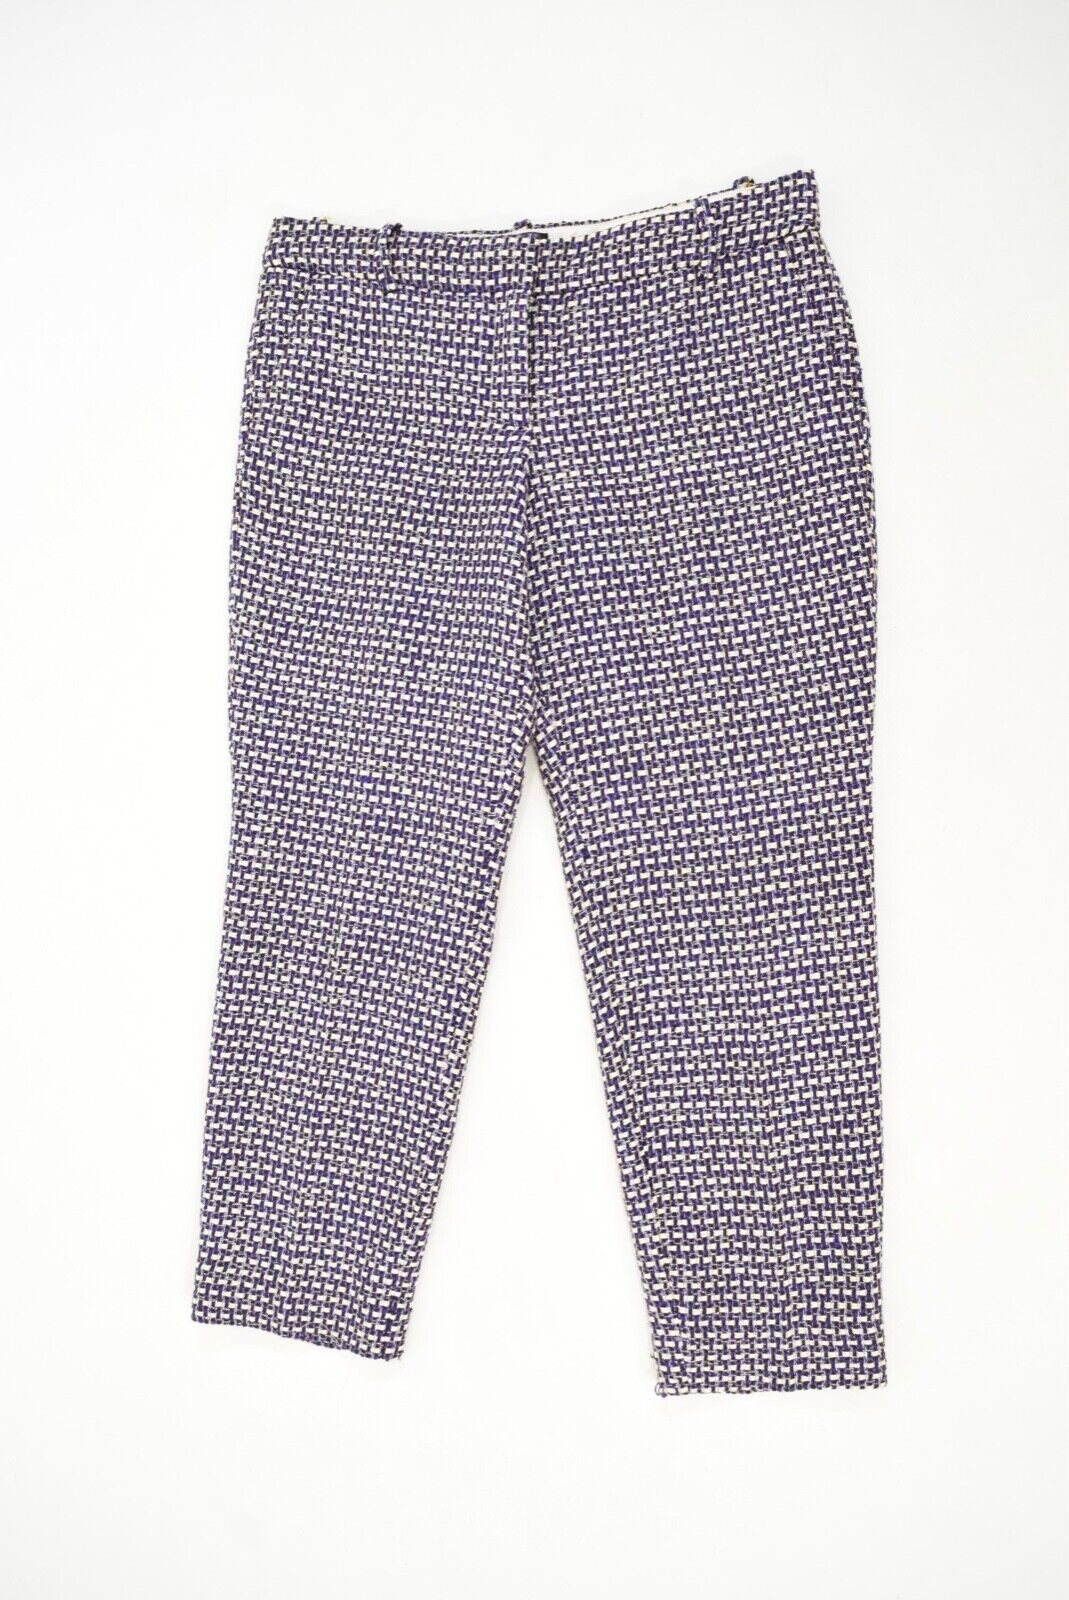 J.Crew Cafe Capri Pants 6 Metallic Purple Tweed S… - image 3